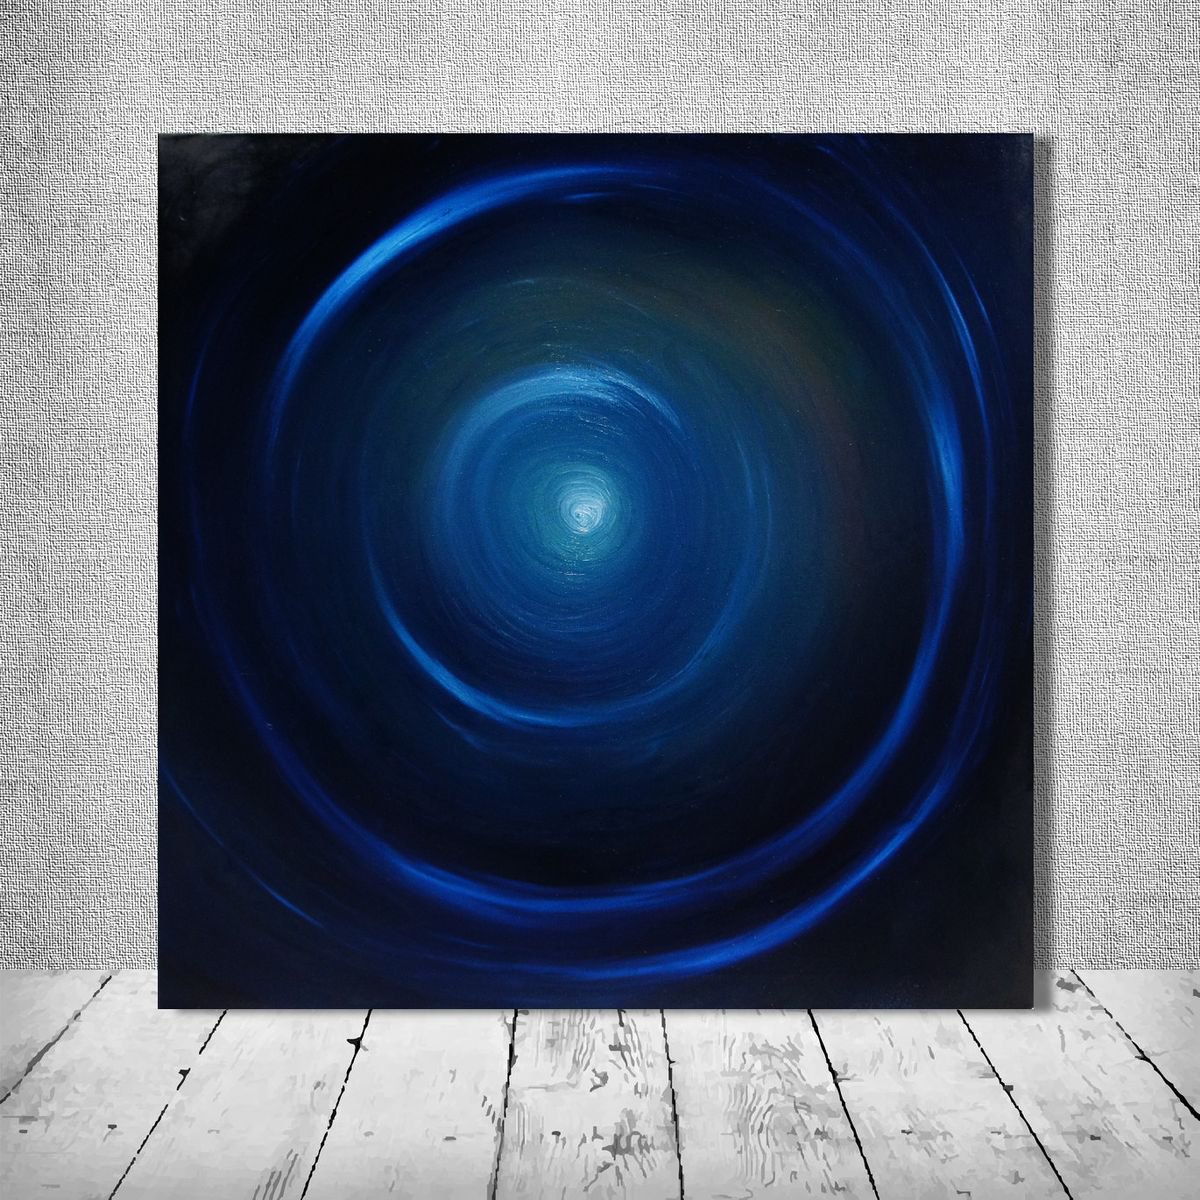 Eye Of The Hurricane (80 x 80 cm) oil XL (32 x 32 inches) by Ansgar Dressler